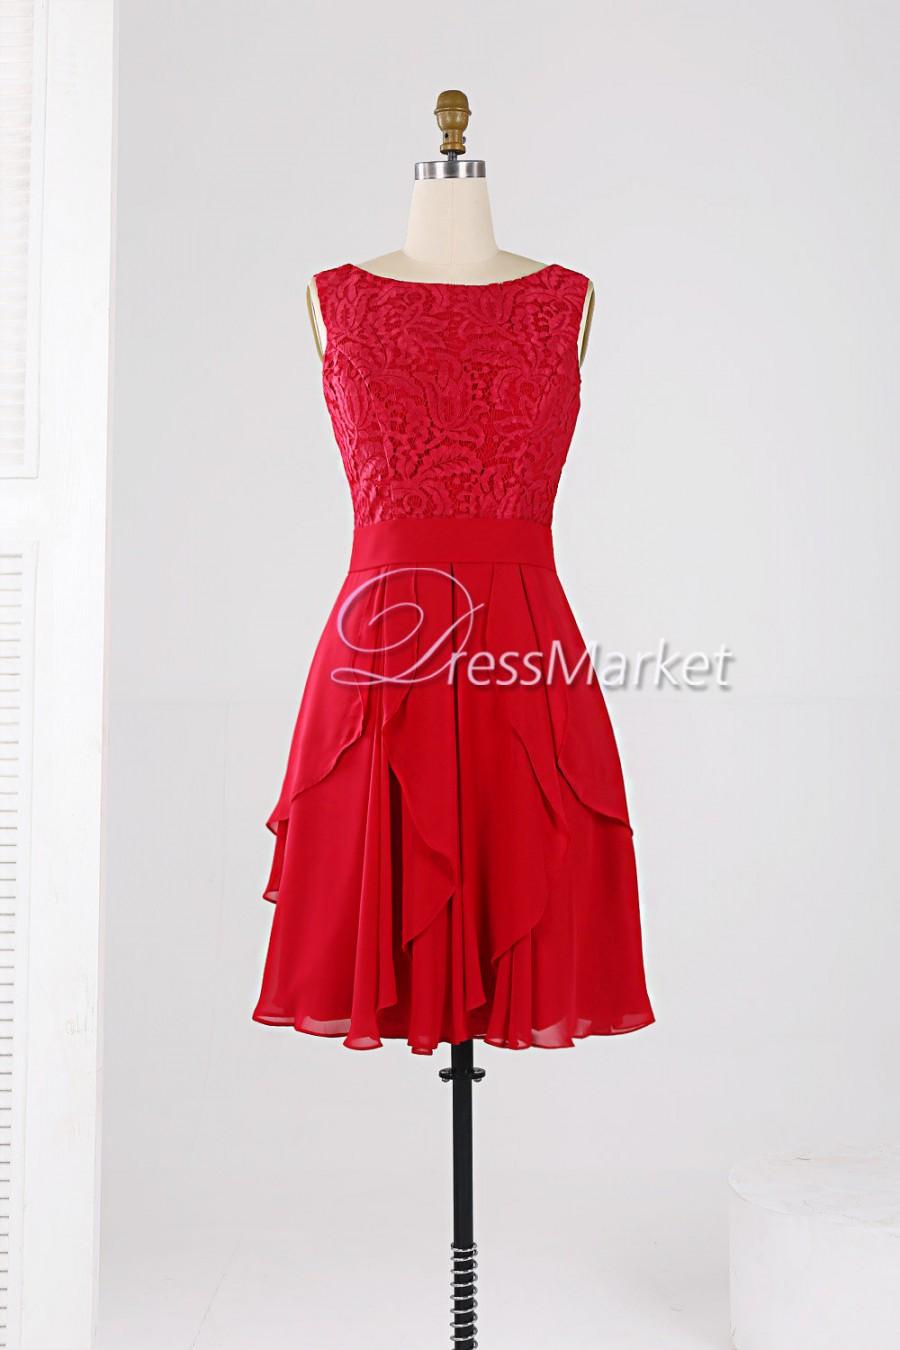 Mariage - Knee length red homecoming dress,Short Bridesmaid dress,Knee length chiffon and lace wedding party dress,Short prom dress,DressMarket022